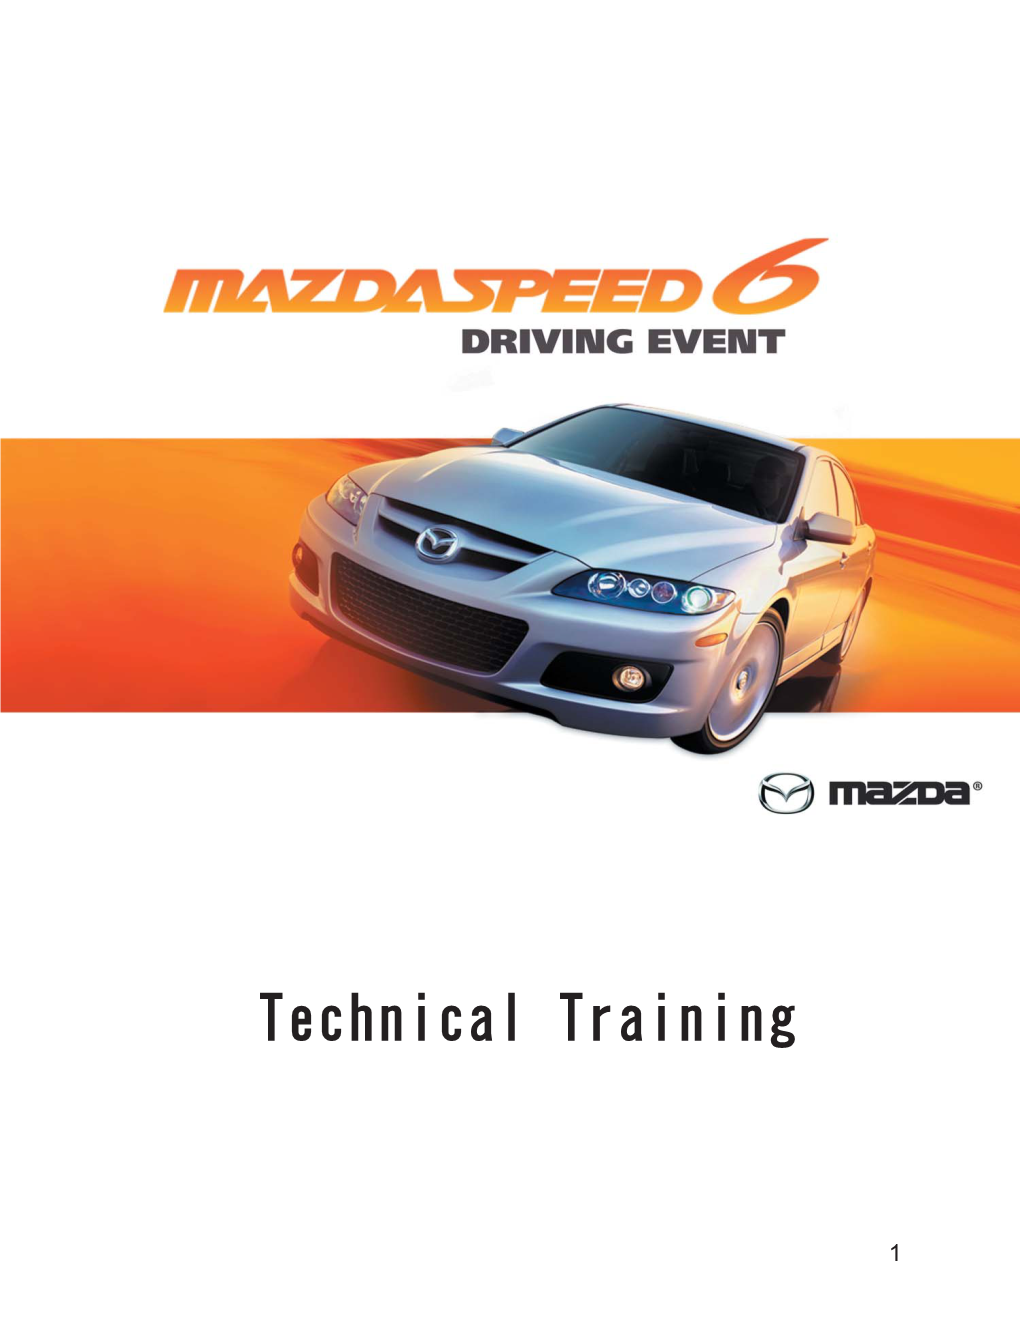 Mazdaspeed 6 Technical Training